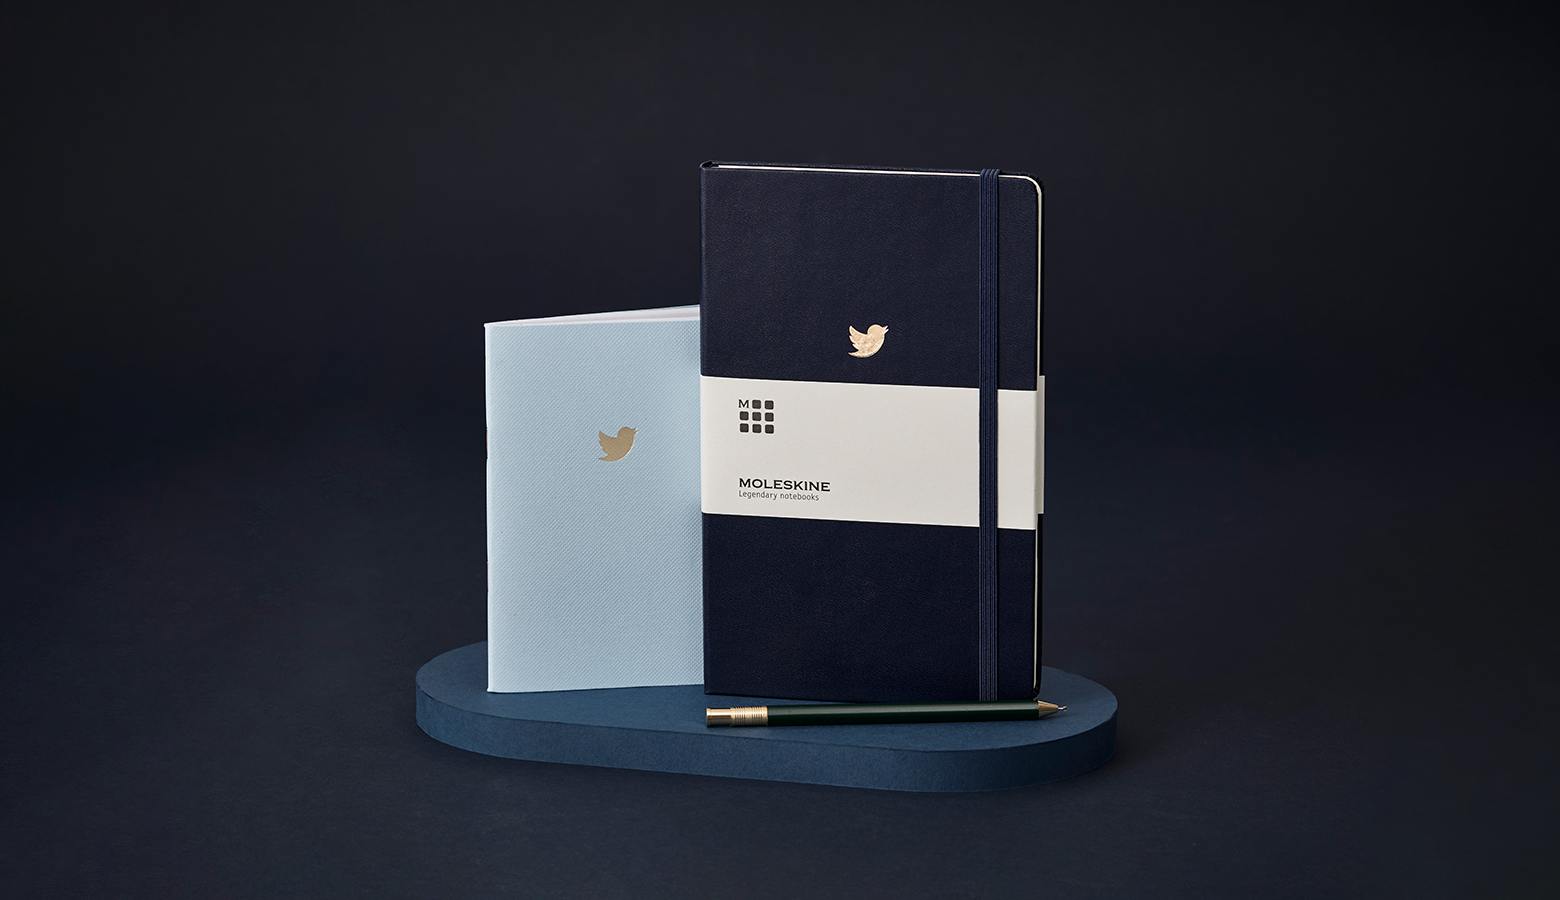 Twitter Notebooks